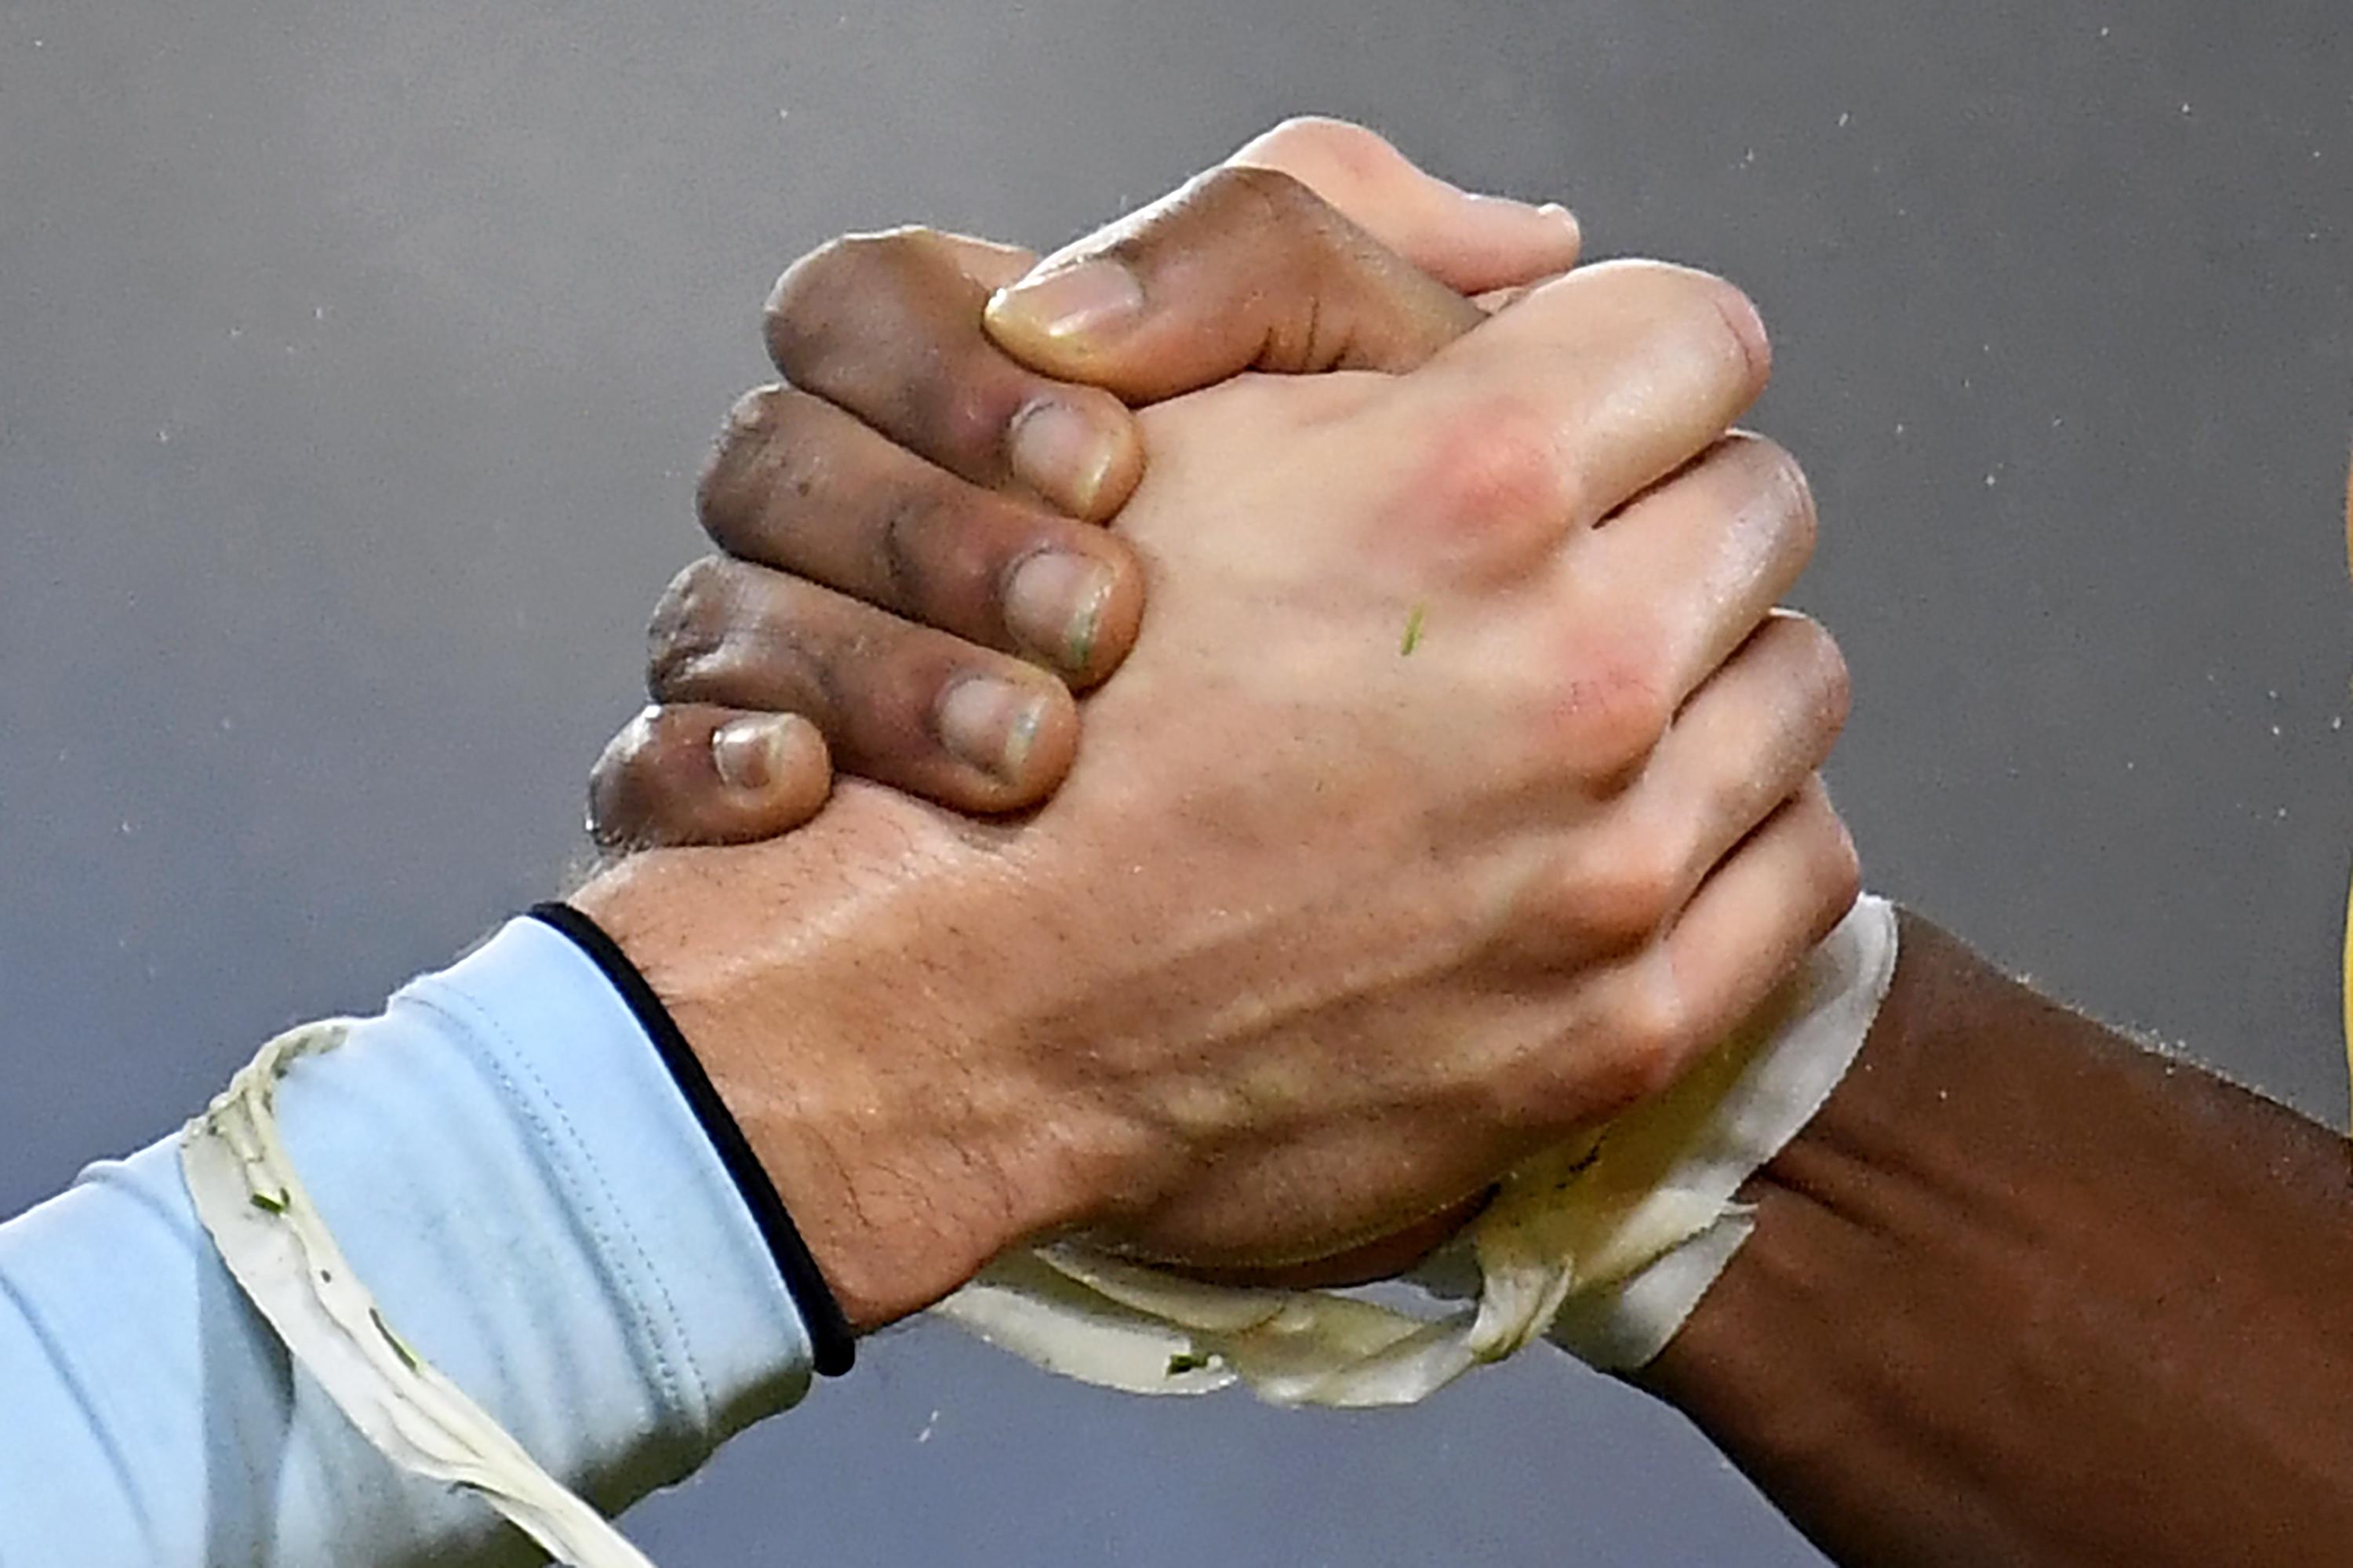 Premier League footballers hold hands.